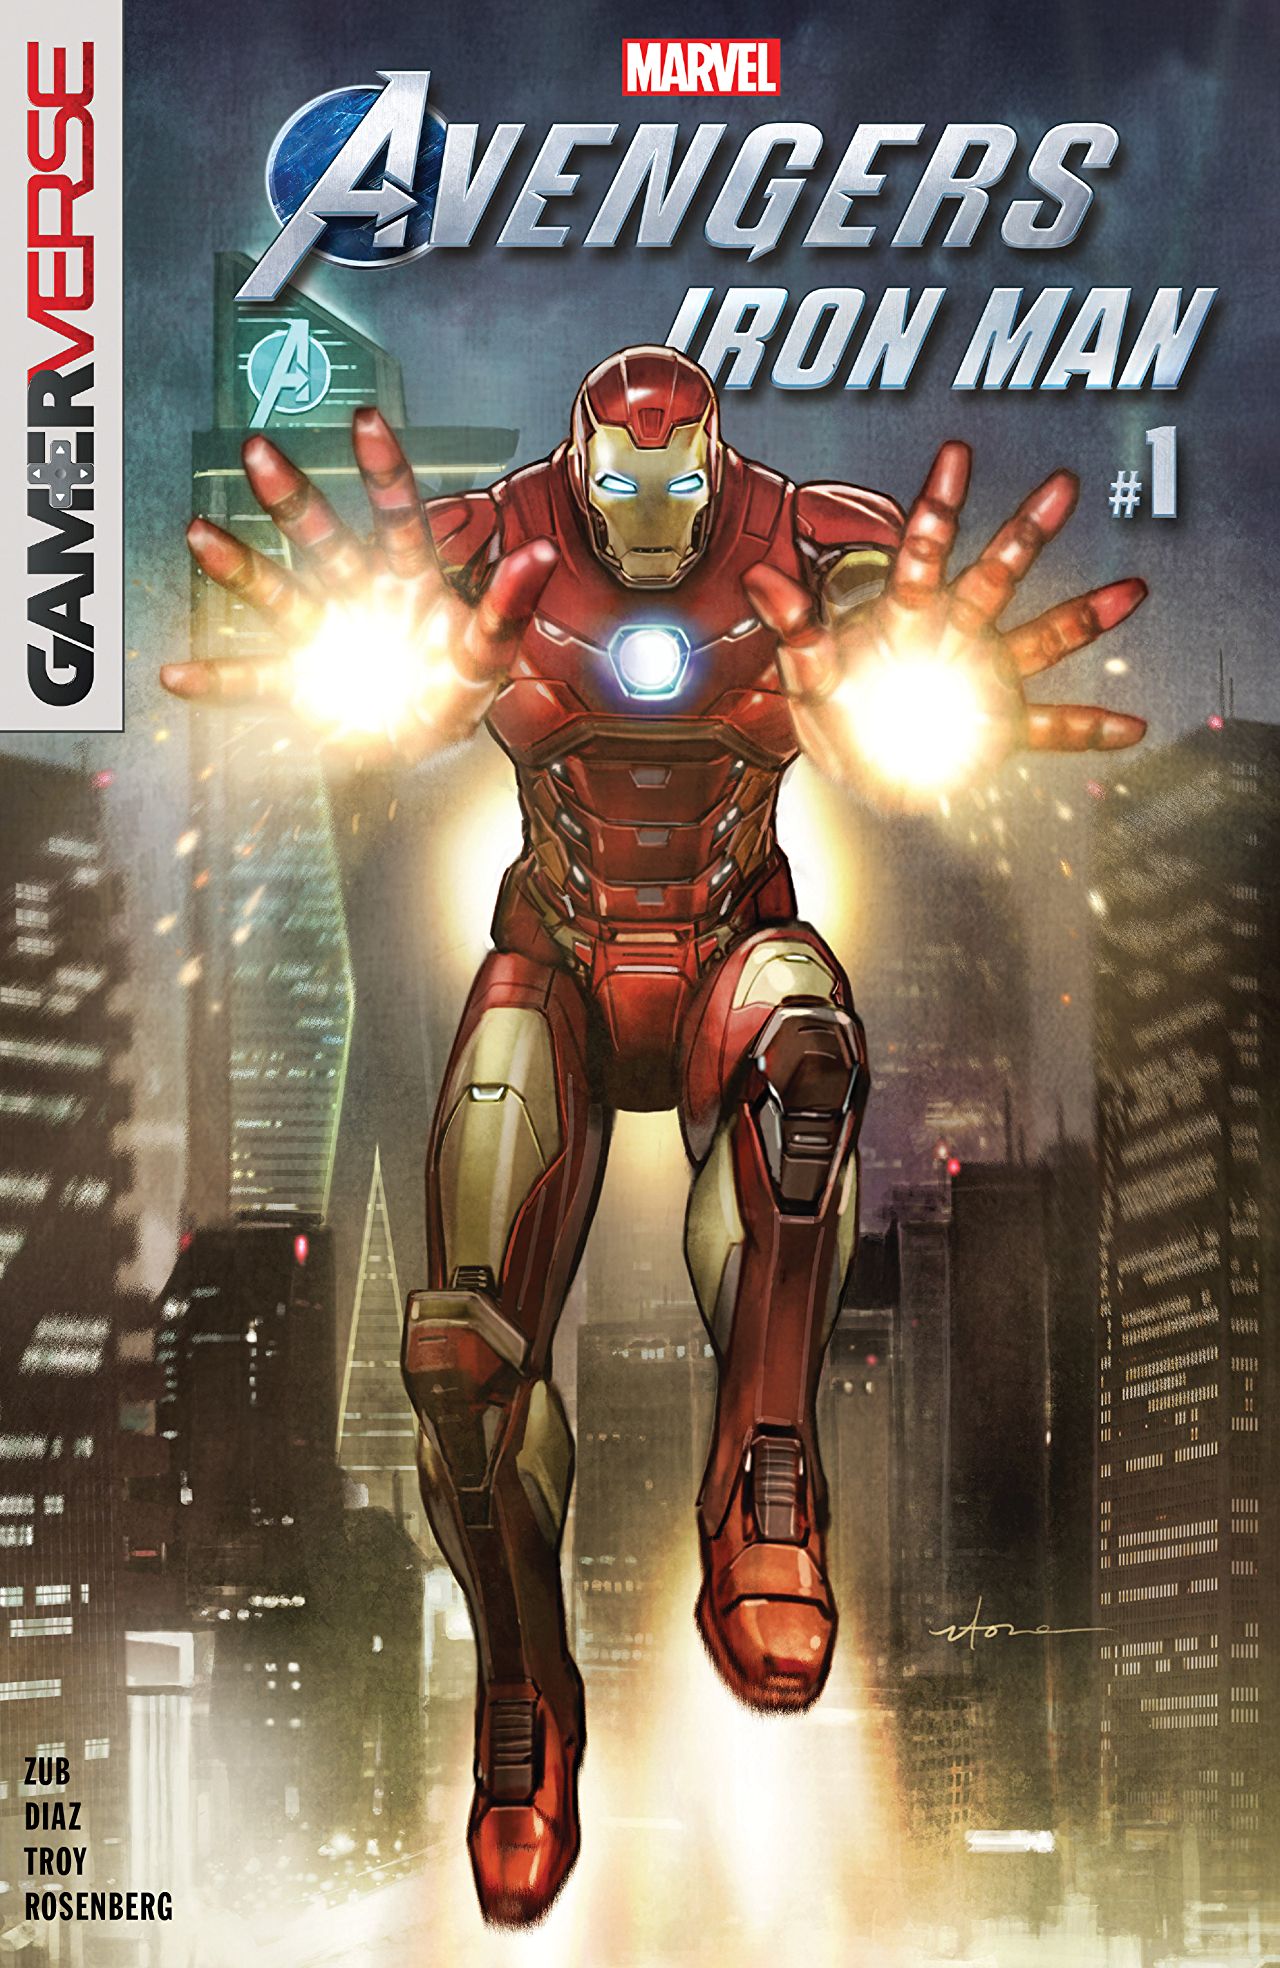 Marvel's Avengers: Iron Man #1 Prequel Comic Impressions